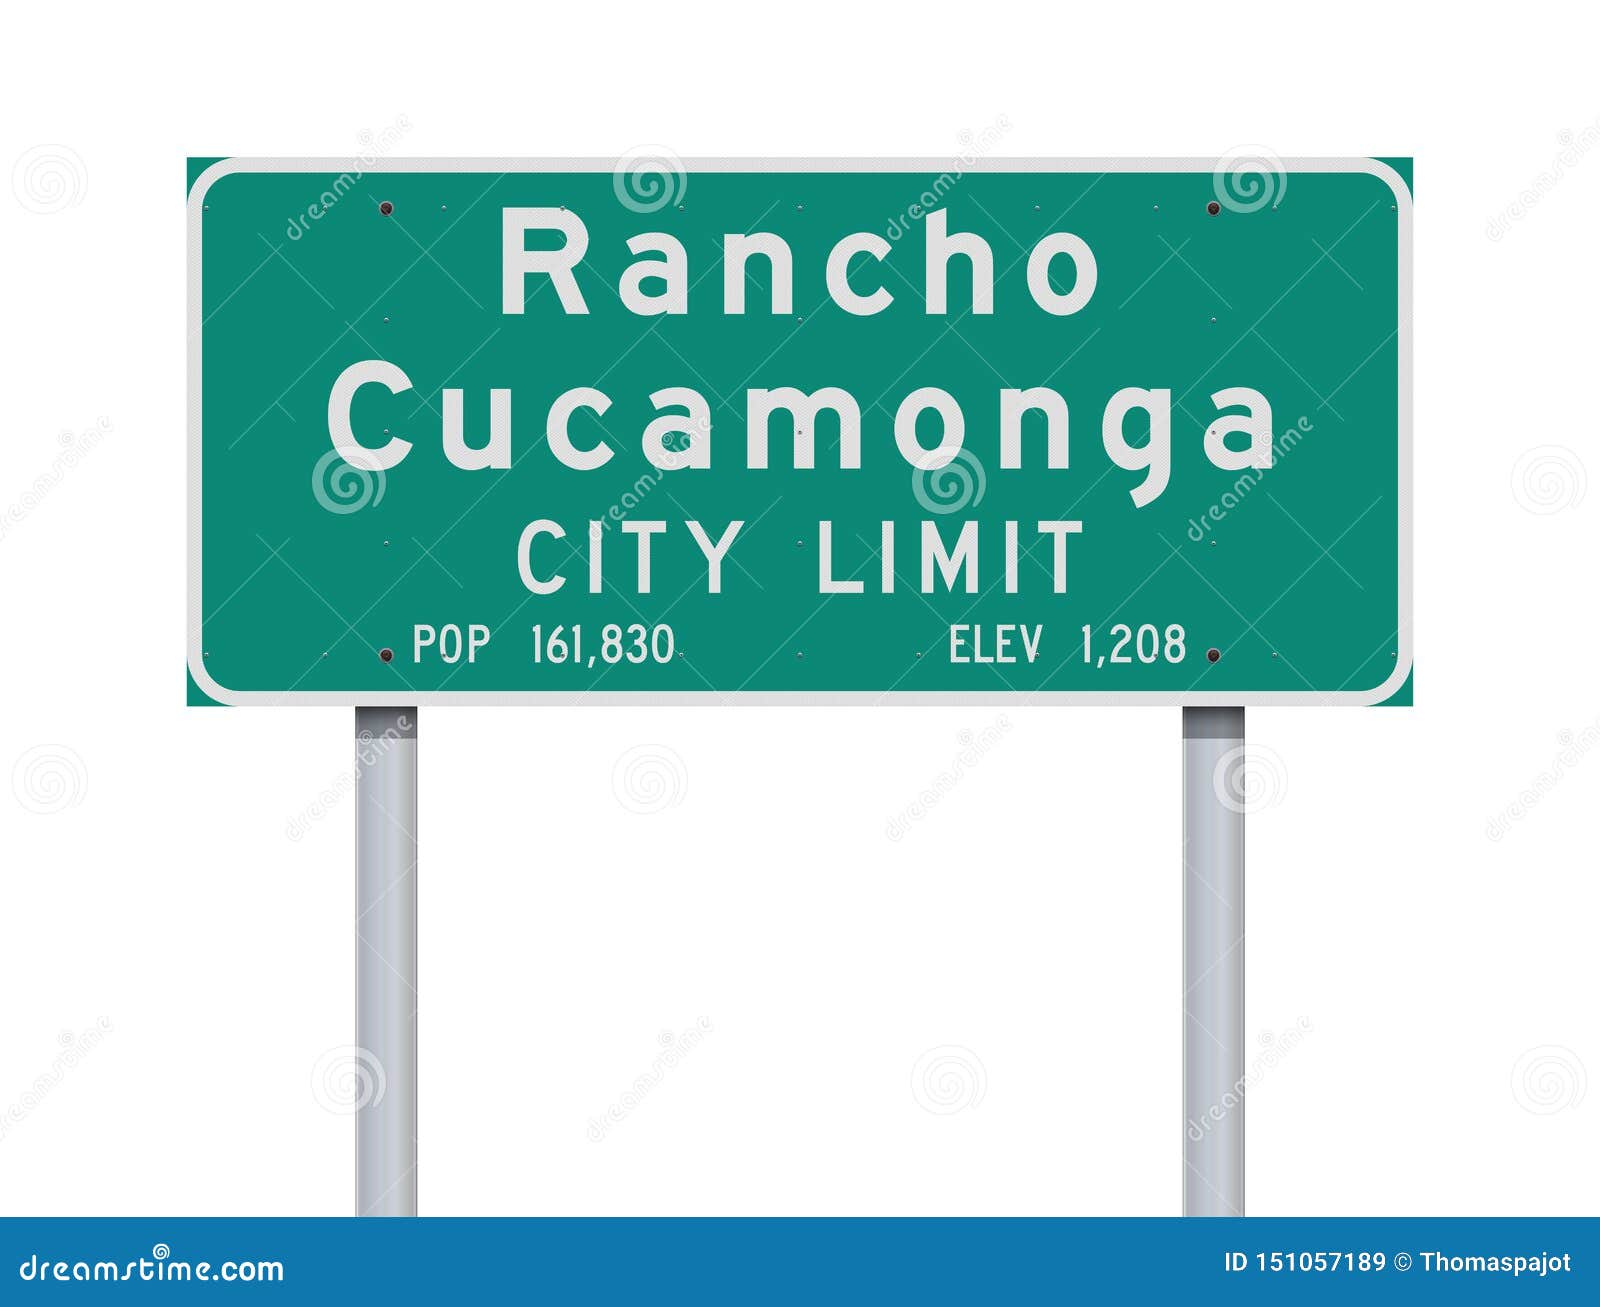 rancho cucamonga city limit road sign